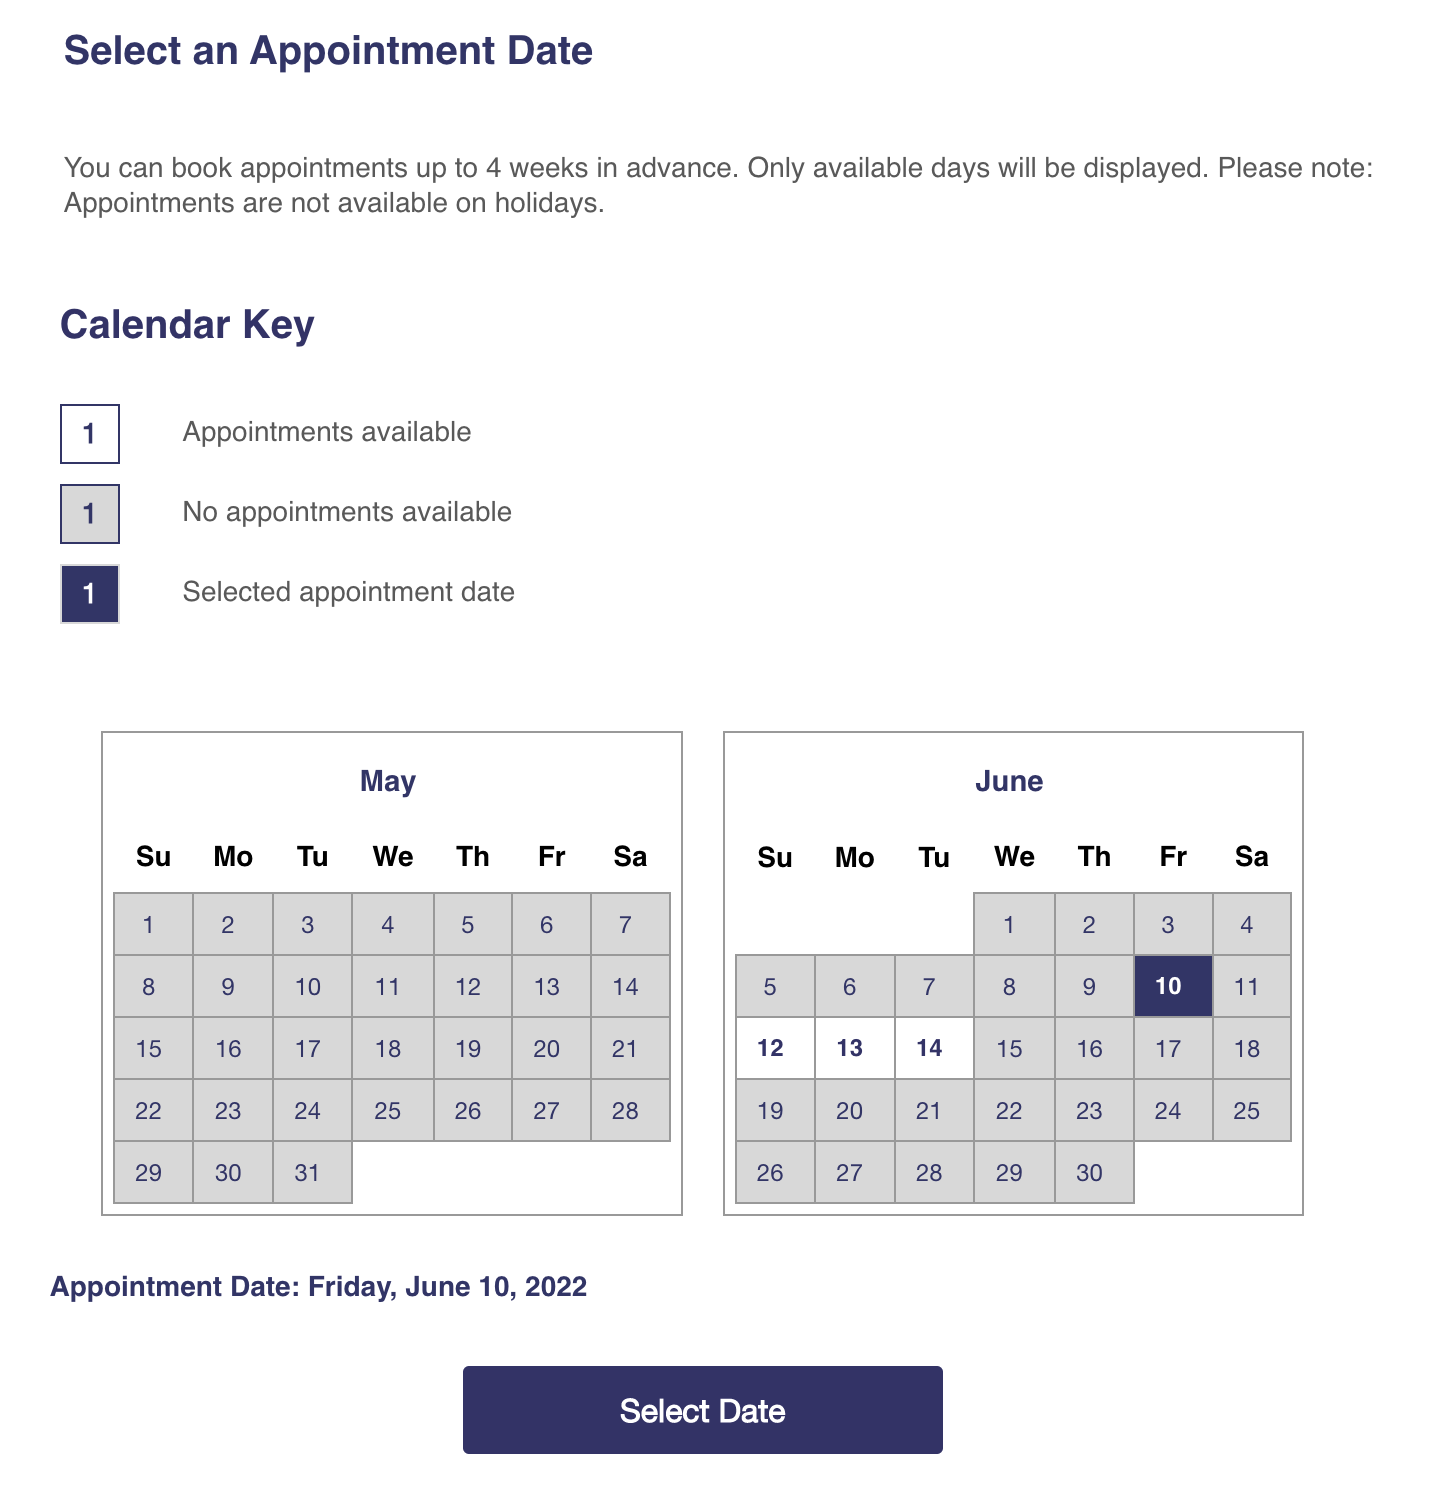 usps passport appointment schedule